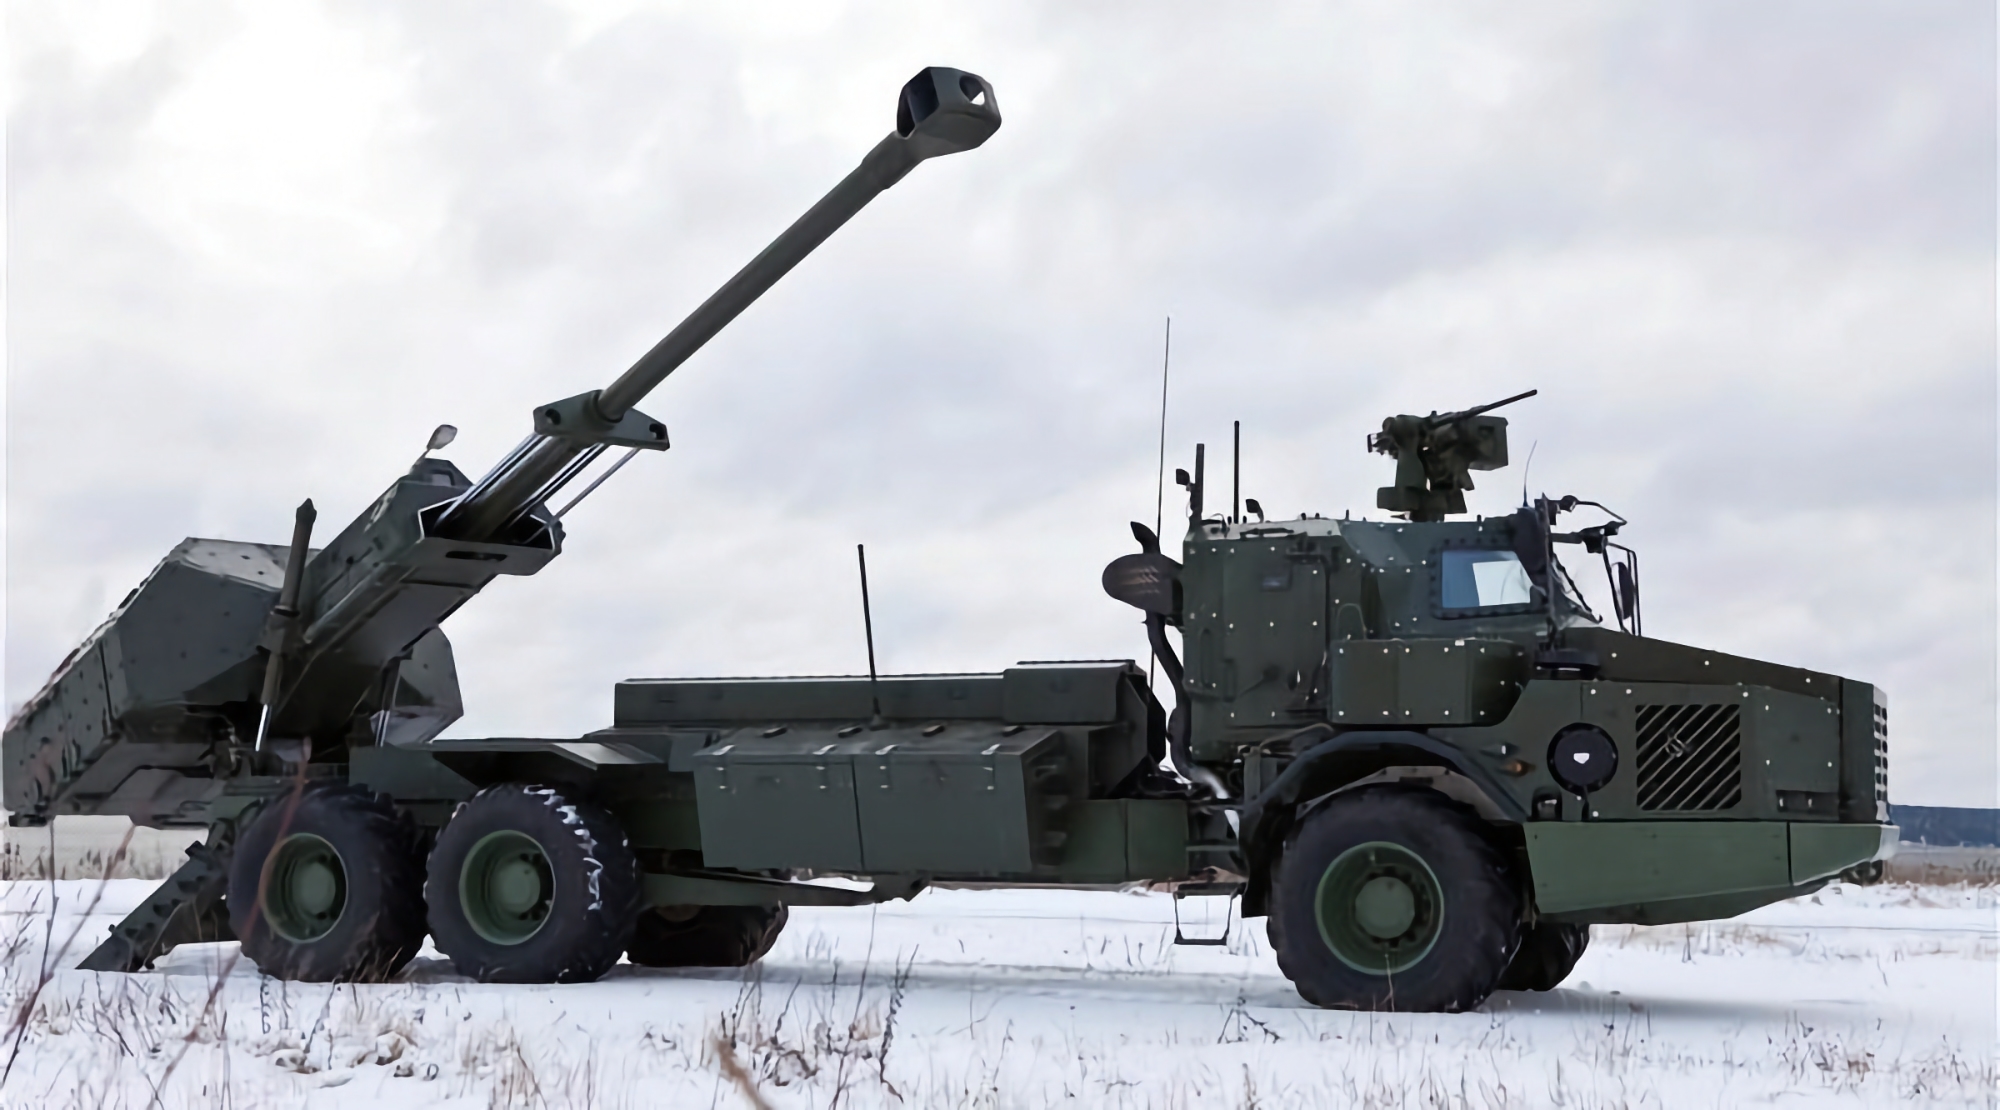 Not just CV90 BMPs: Sweden will transfer Archer self-propelled artillery units to Ukraine